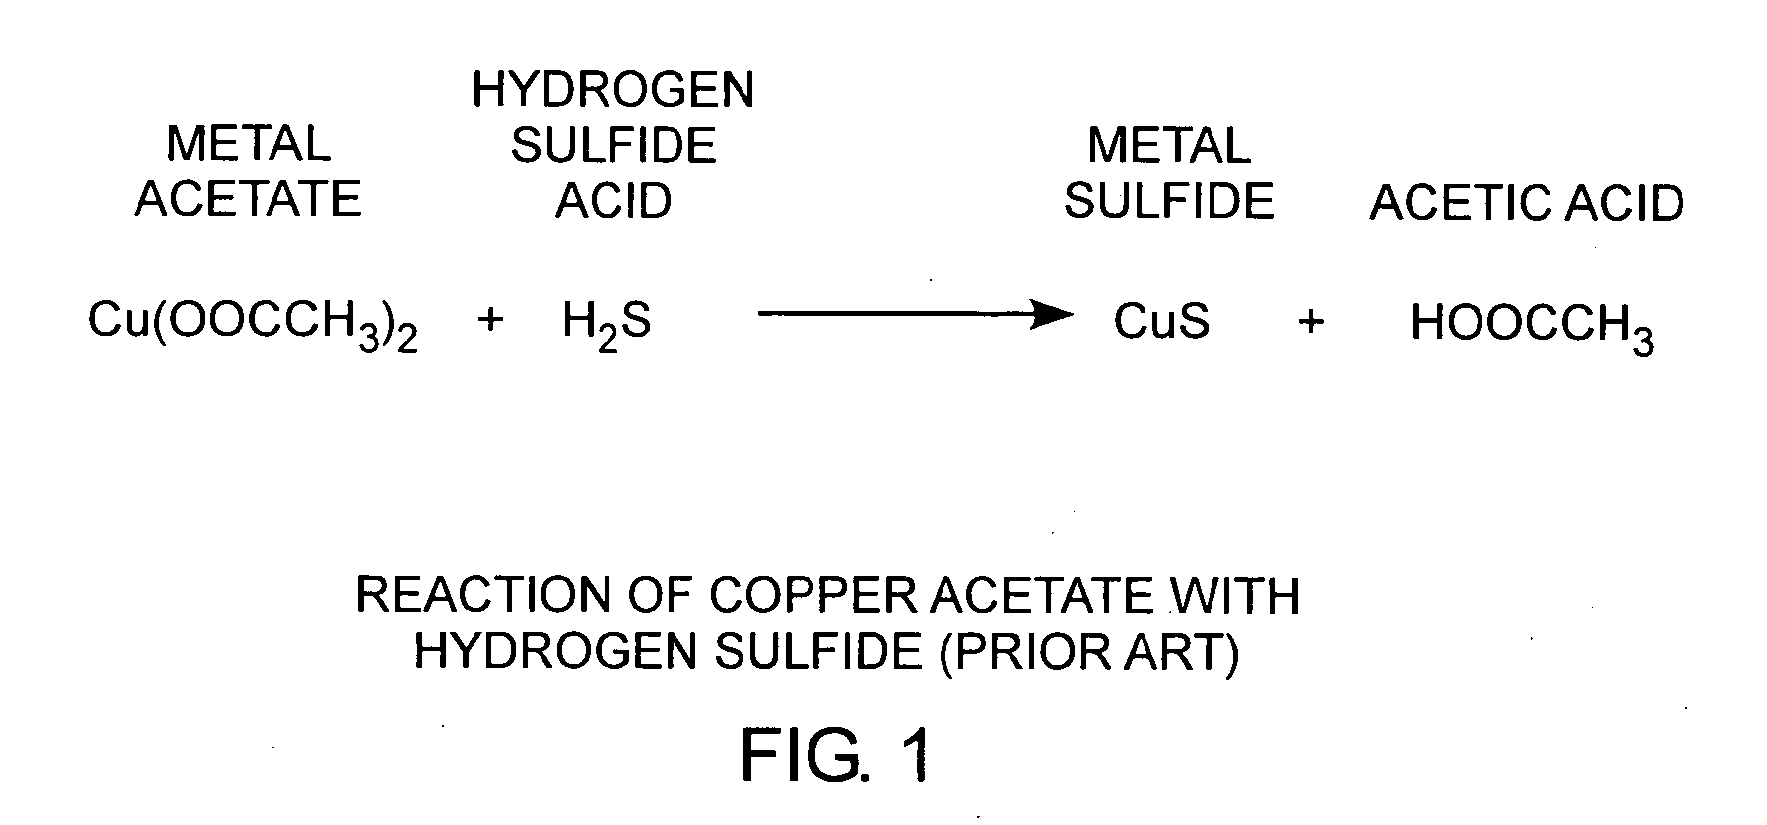 Metal salt hydrogen sulfide sensor